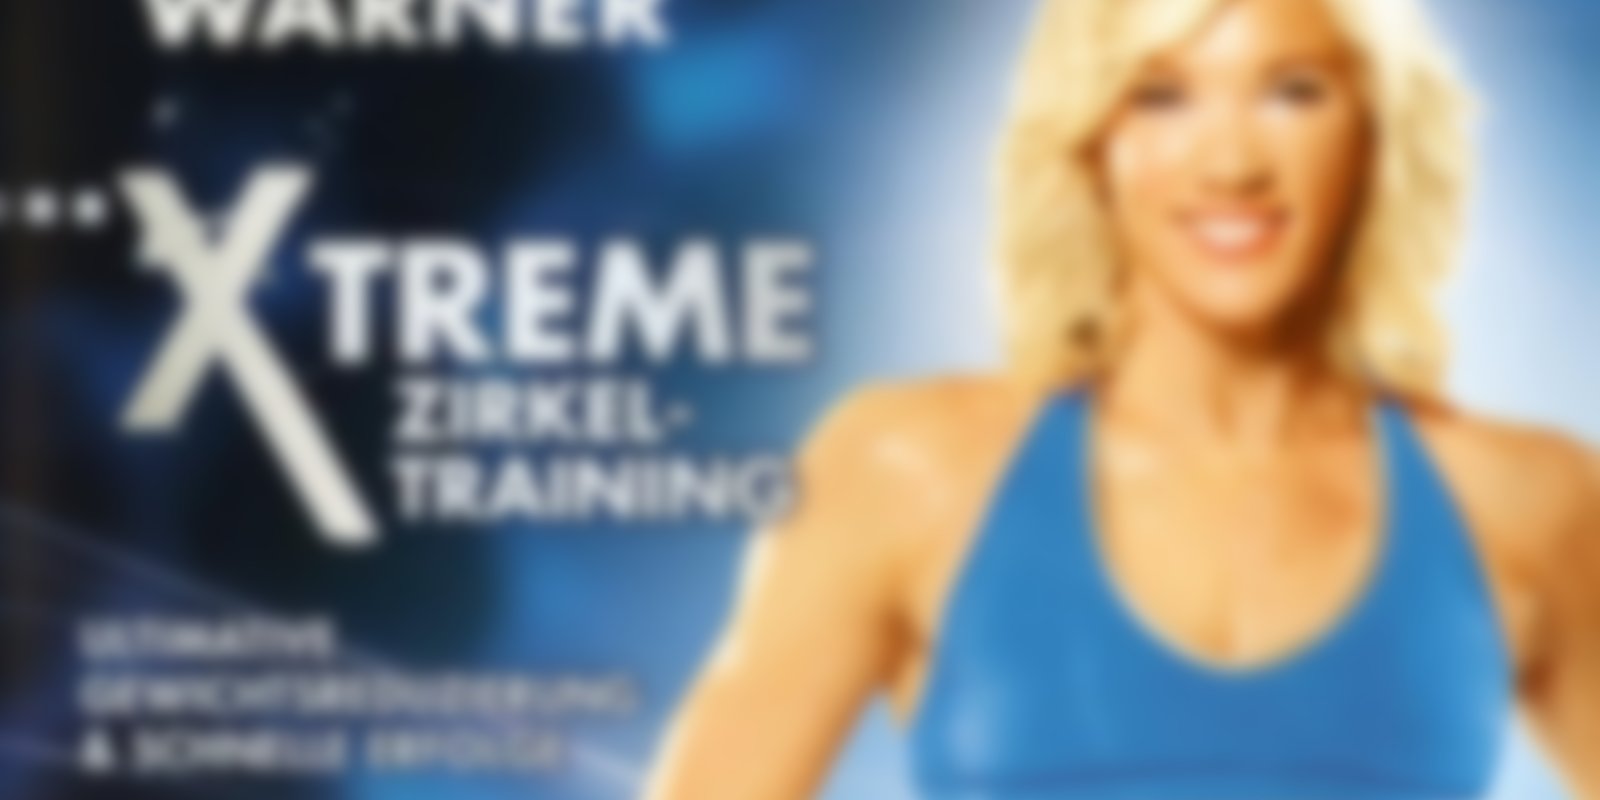 Personal Training mit Jackie Warner - Xtreme Zirkeltraining